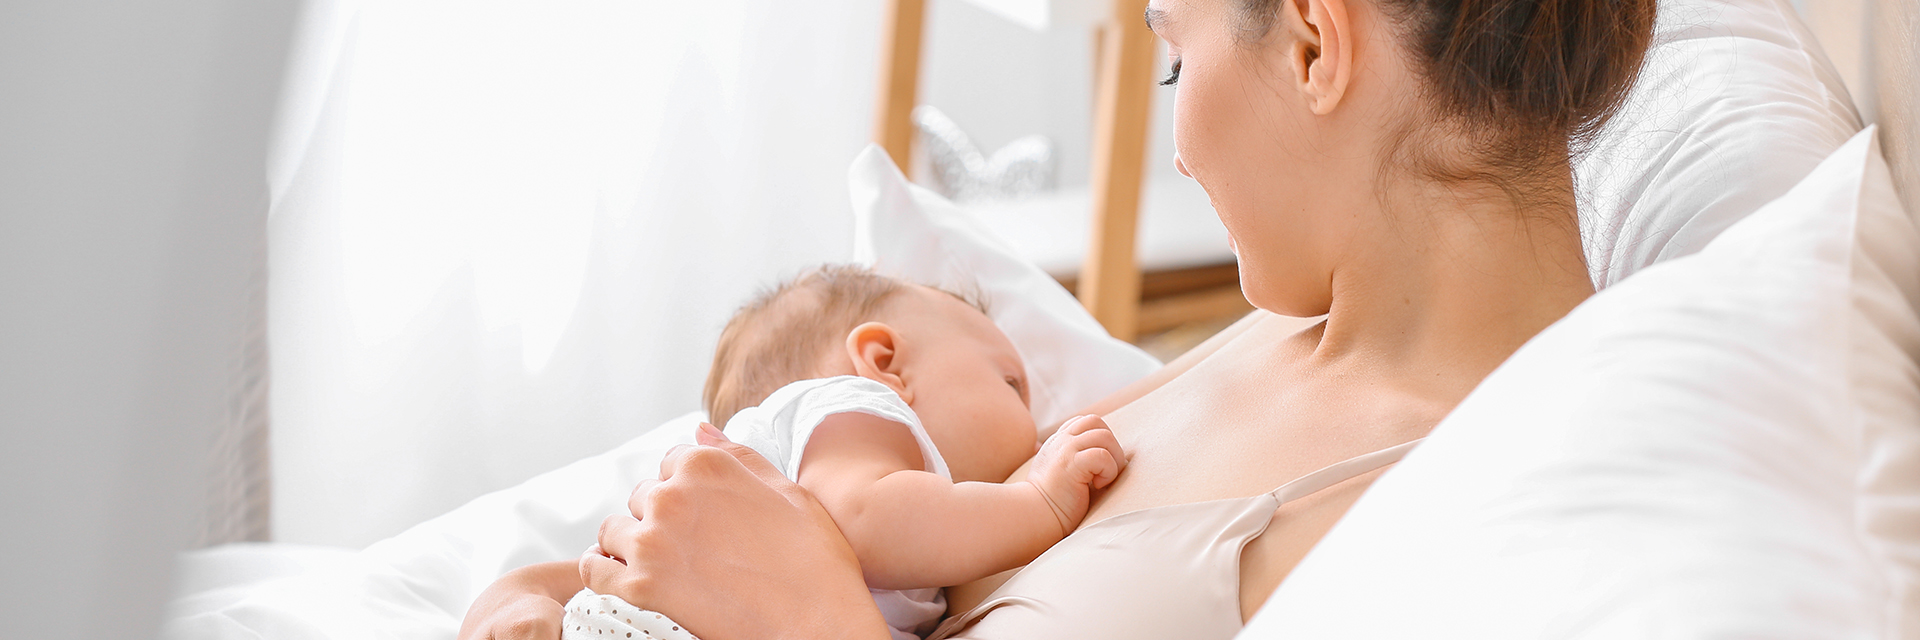 https://www.texashealth.org/baby-care/-/media/Project/THR/Sub-Sites/THR-Baby-Care/Header-Images/Header-new-mom-breastfeeding-4.jpg?h=640&iar=0&w=1920&hash=77BB962AE4B0D964110A58A49C178180